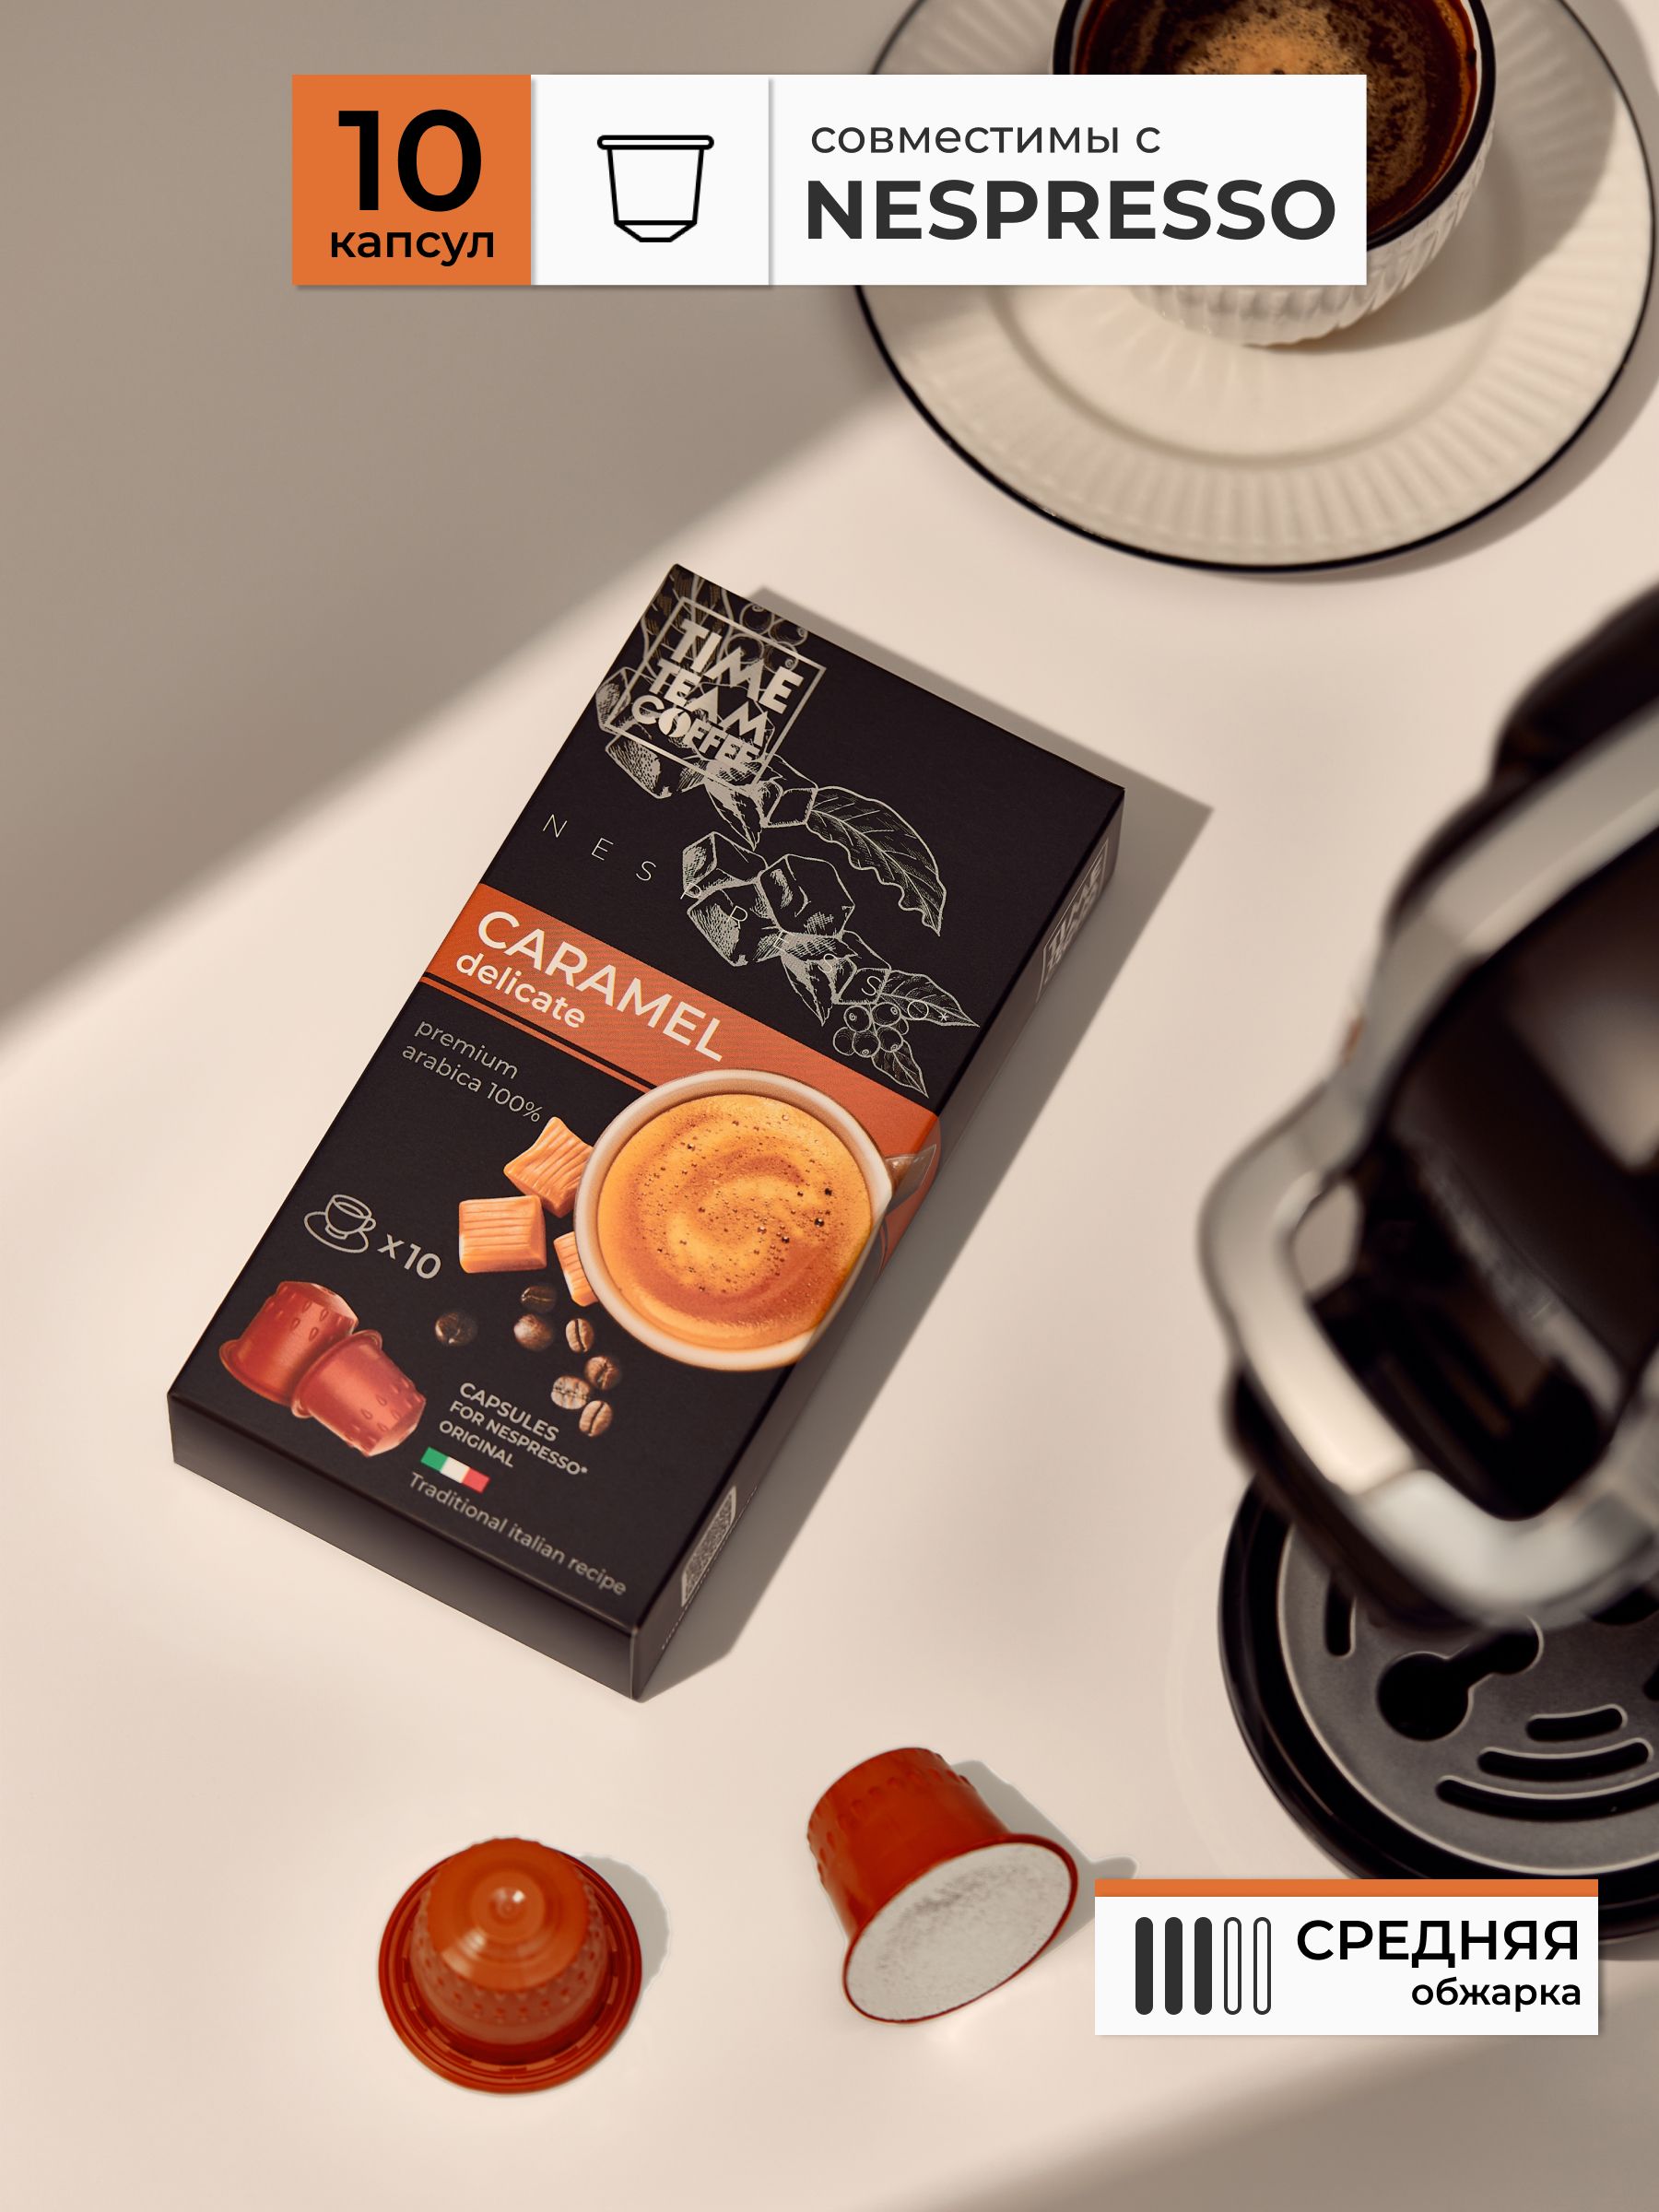 Кофе в капсулах Time Team Coffee Caramel Карамель Nespresso арабика, 10 капсул